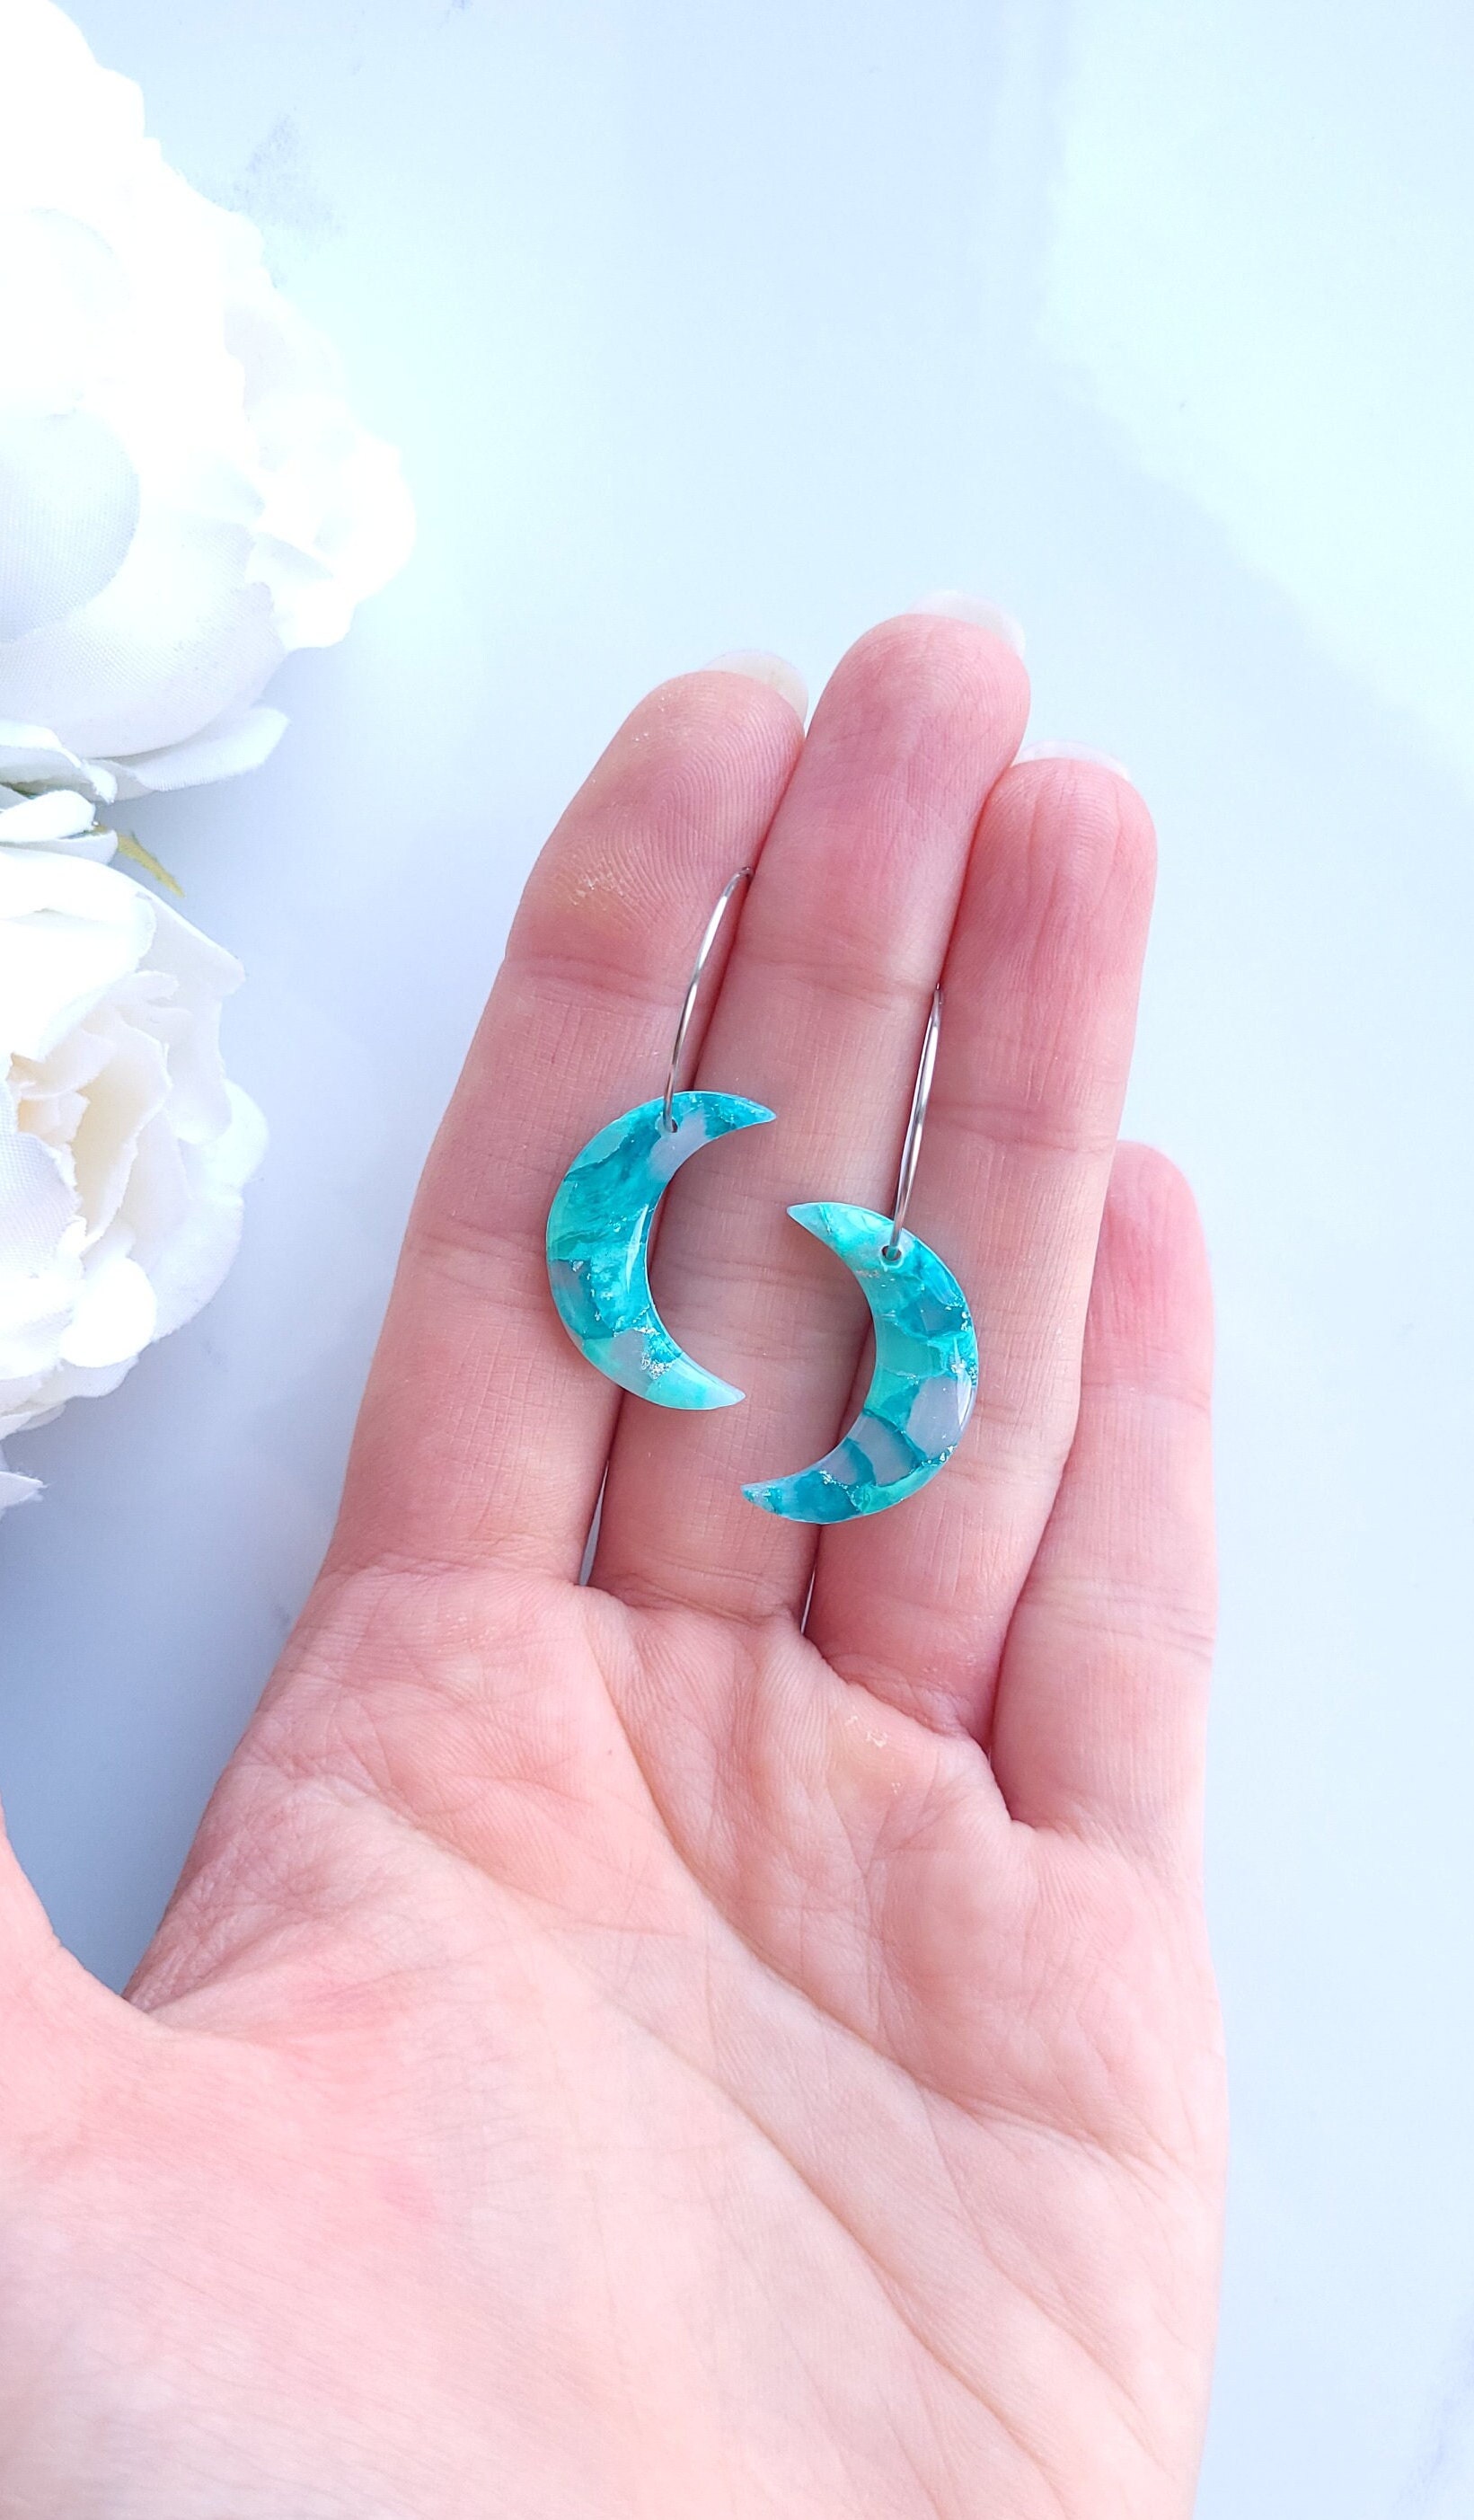 Turquoise, Teal & Silver Marble Earrings | Handmade Polymer Clay Statement Moon Hoop